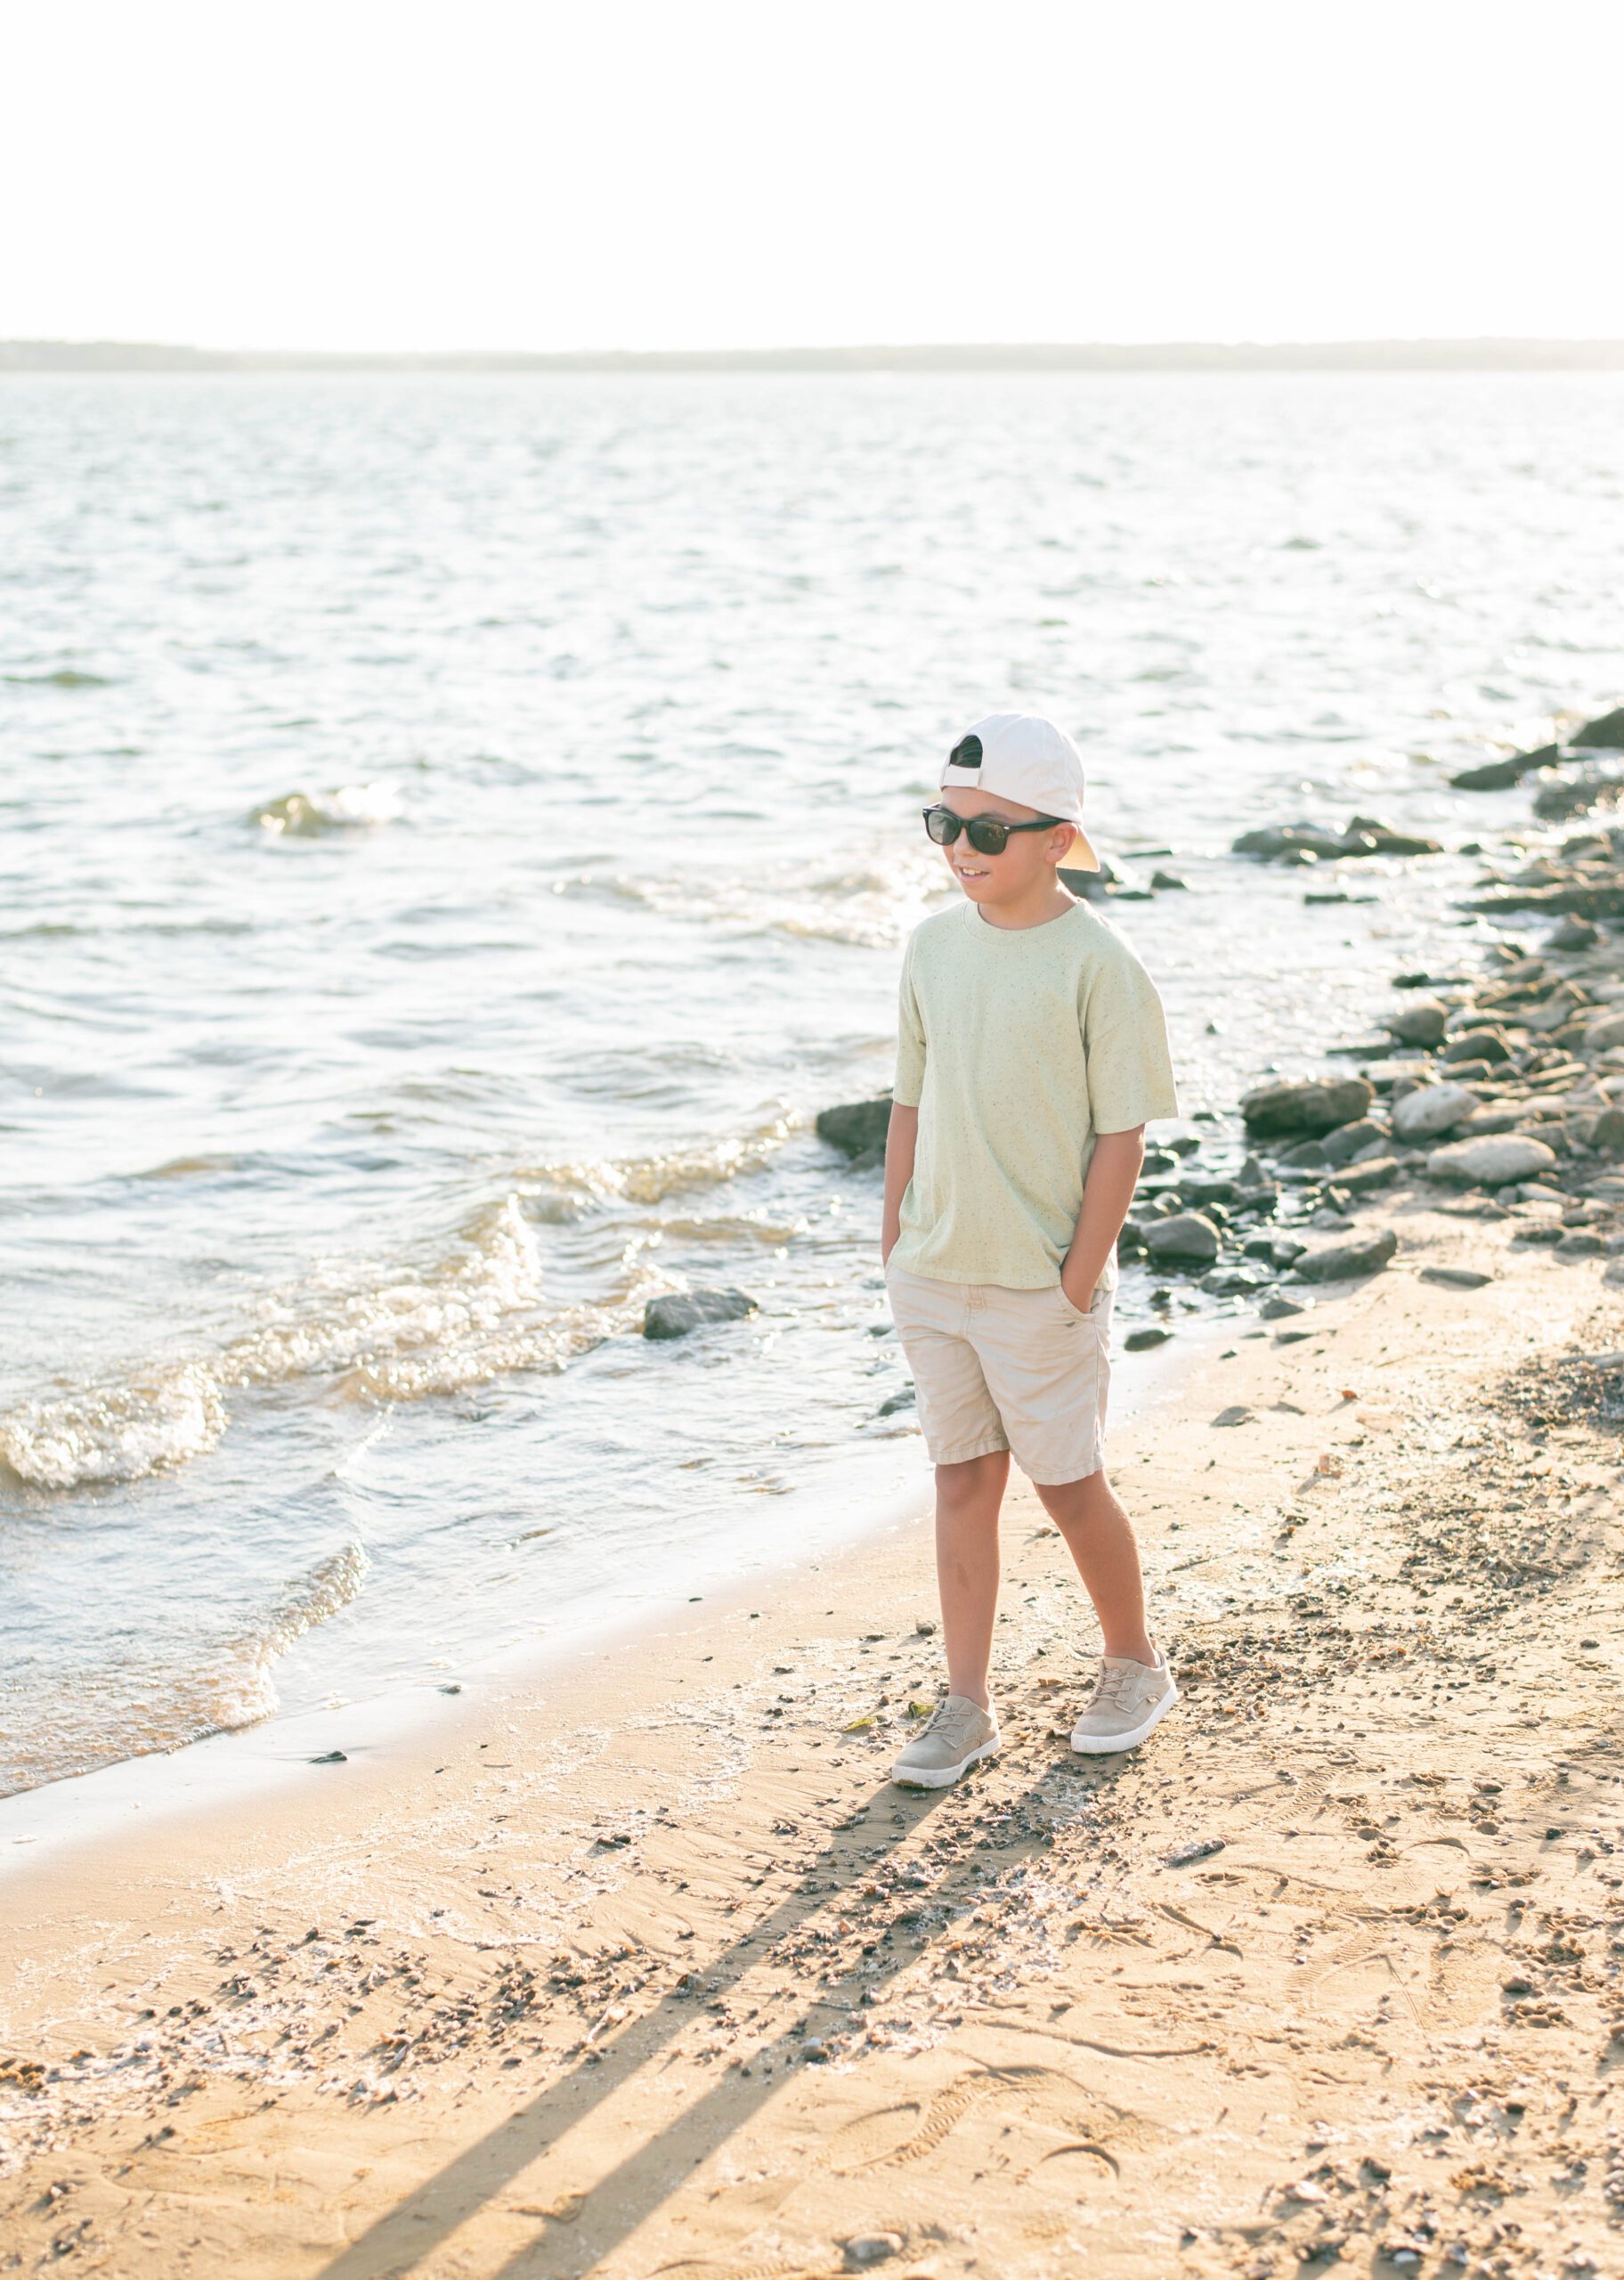 boy walks on the beach with sunglasses on and a backwards baseball cap